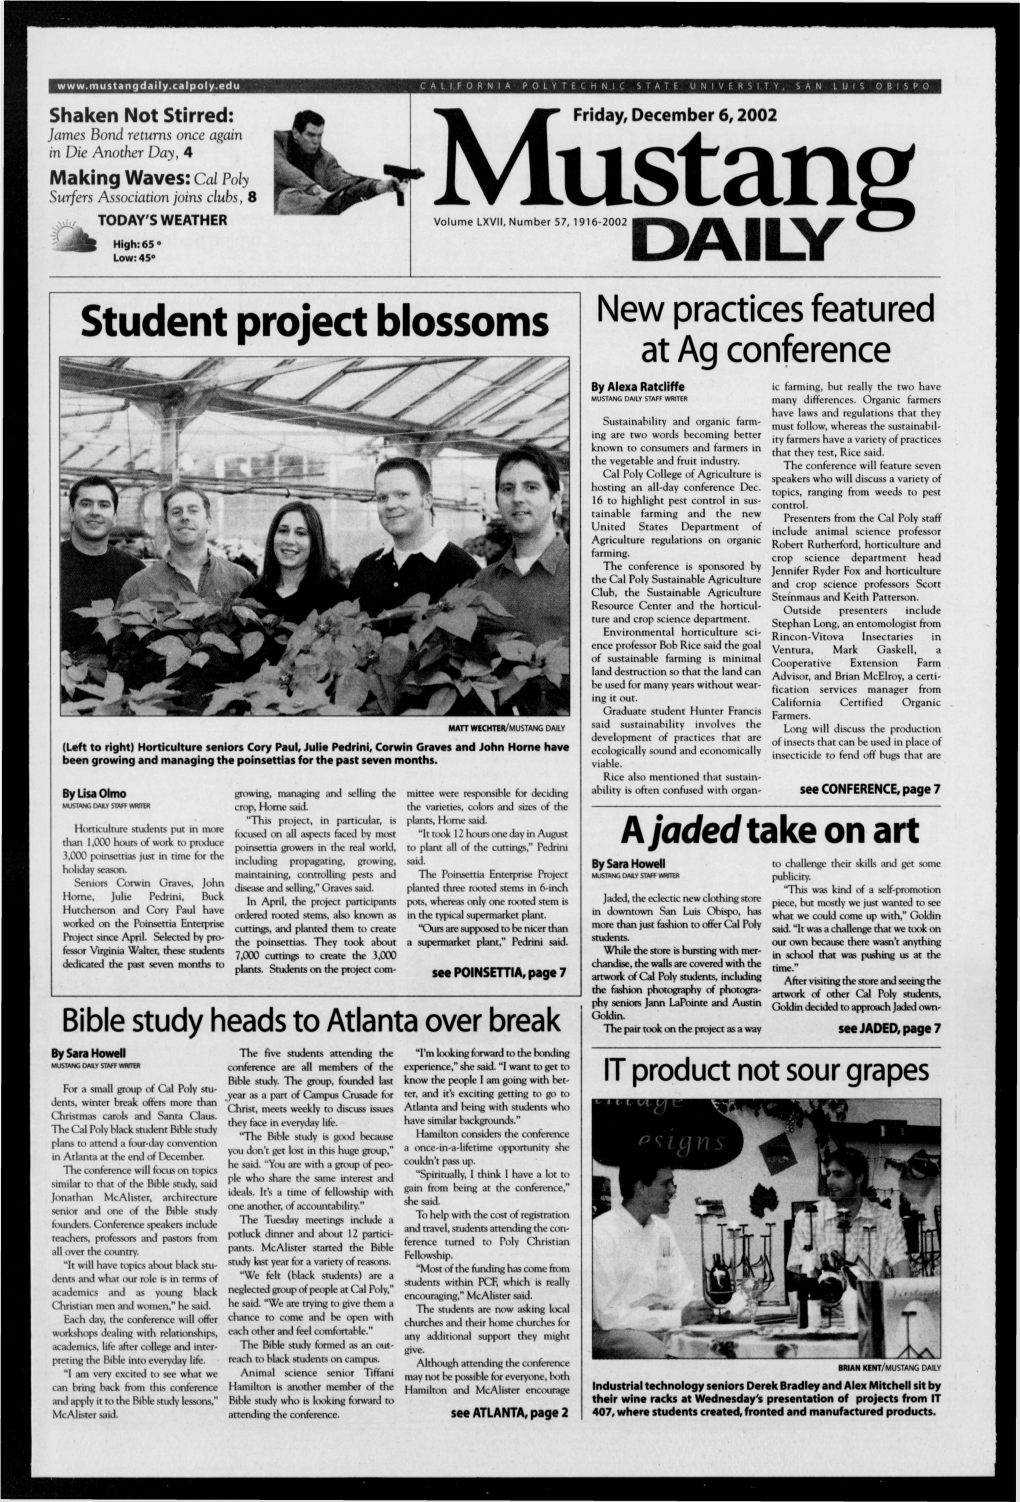 Mustang Daily, December 6, 2002